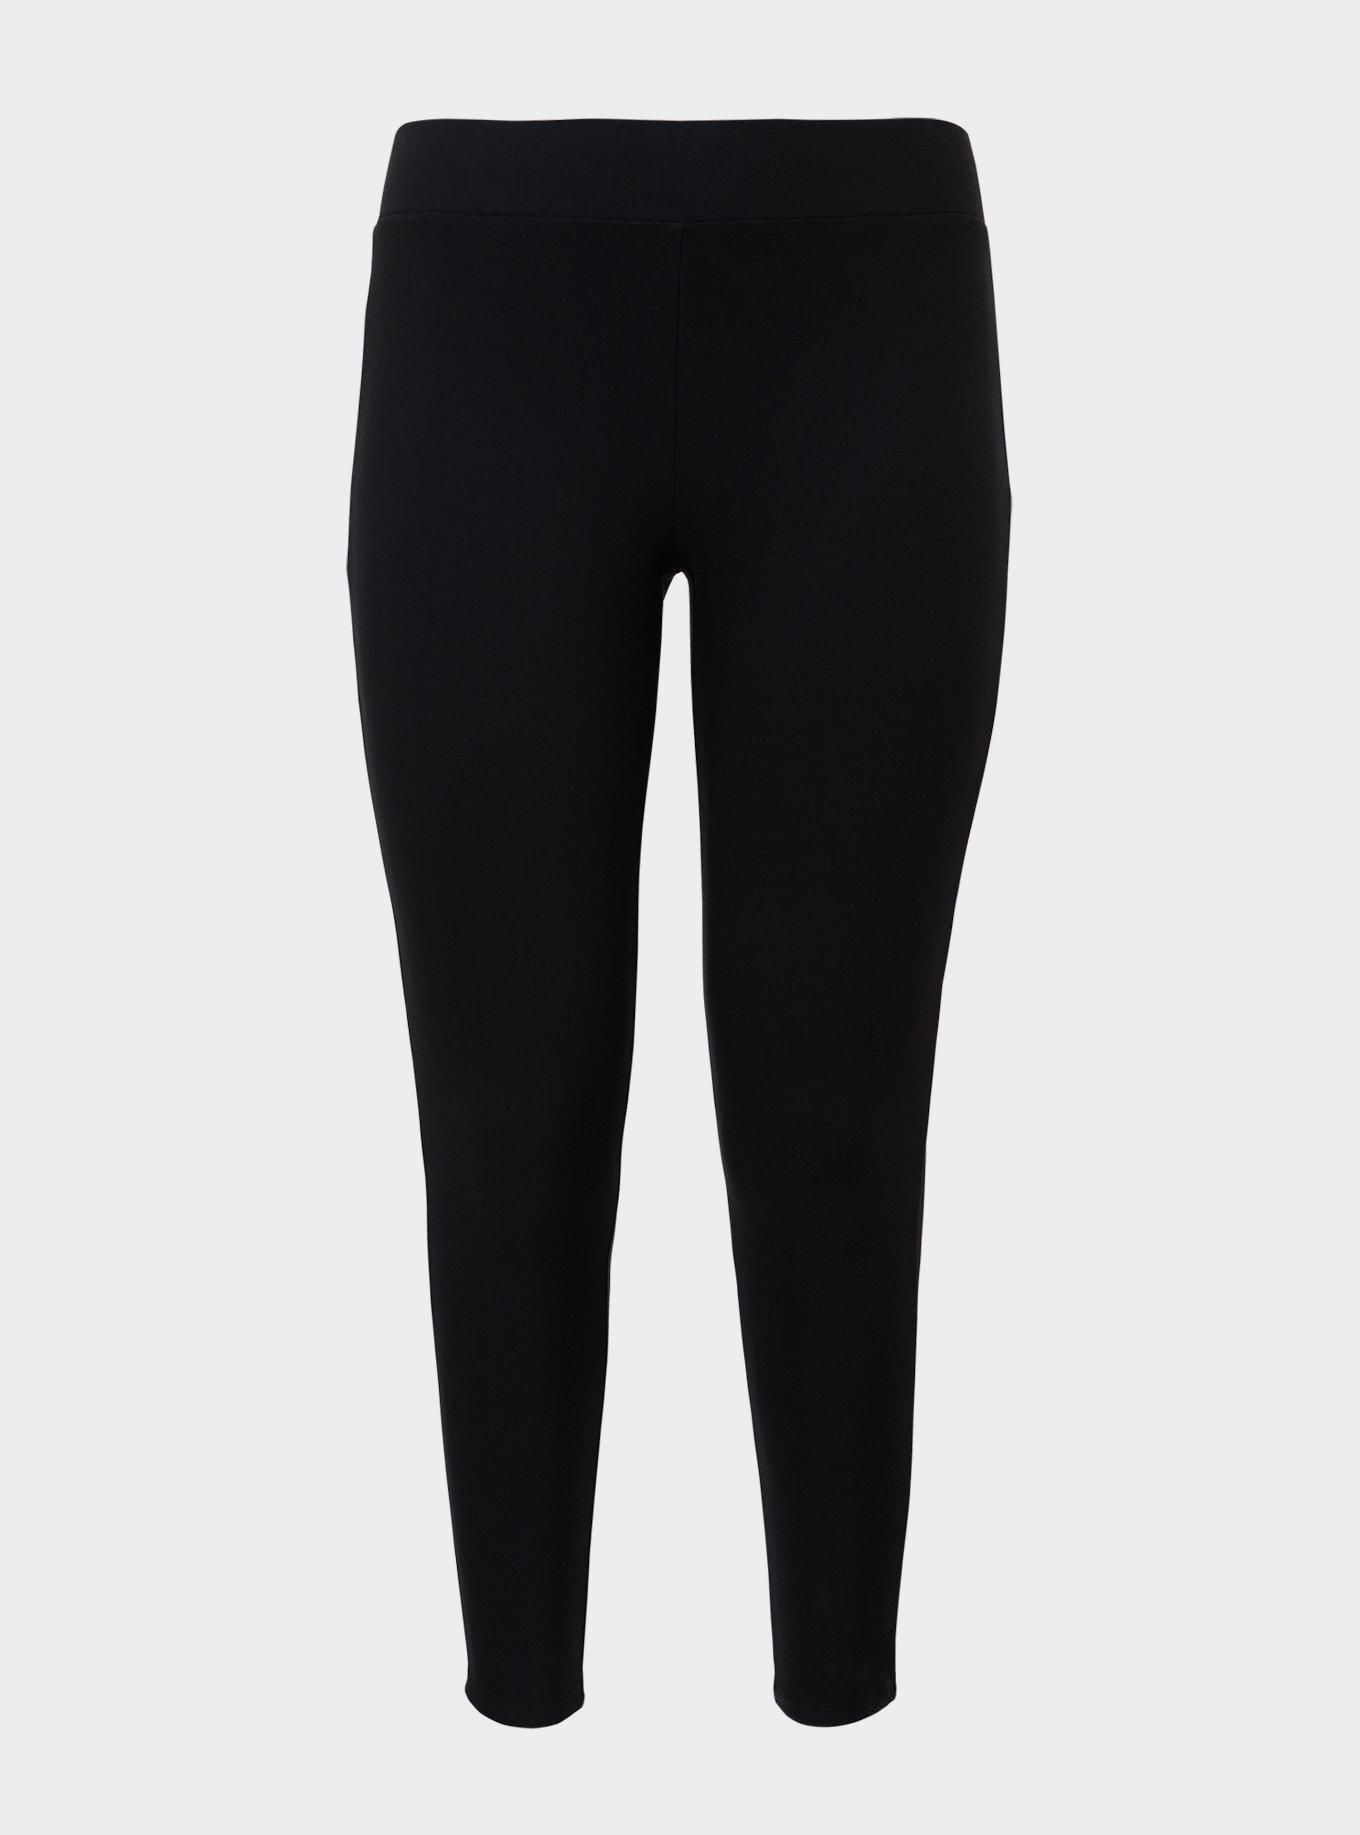 NWT Torrid 0 Black Full Length Premium Legging Pants Star Knees, Womens L  12